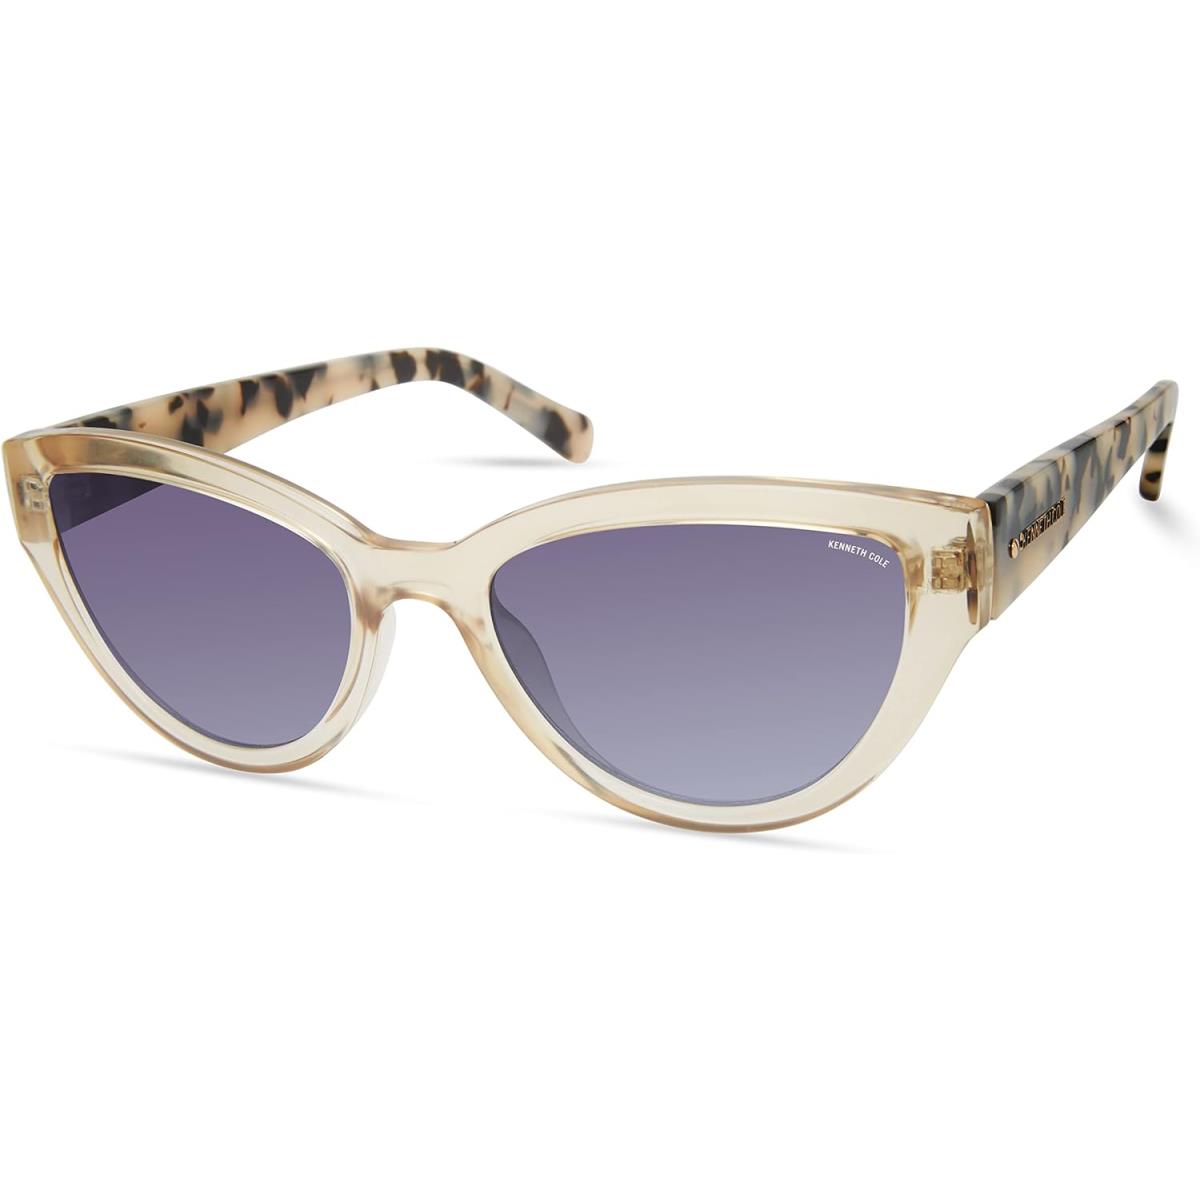 Kenneth Cole Women`s Cat Sunglasses Shiny Beige / Gradient Blue